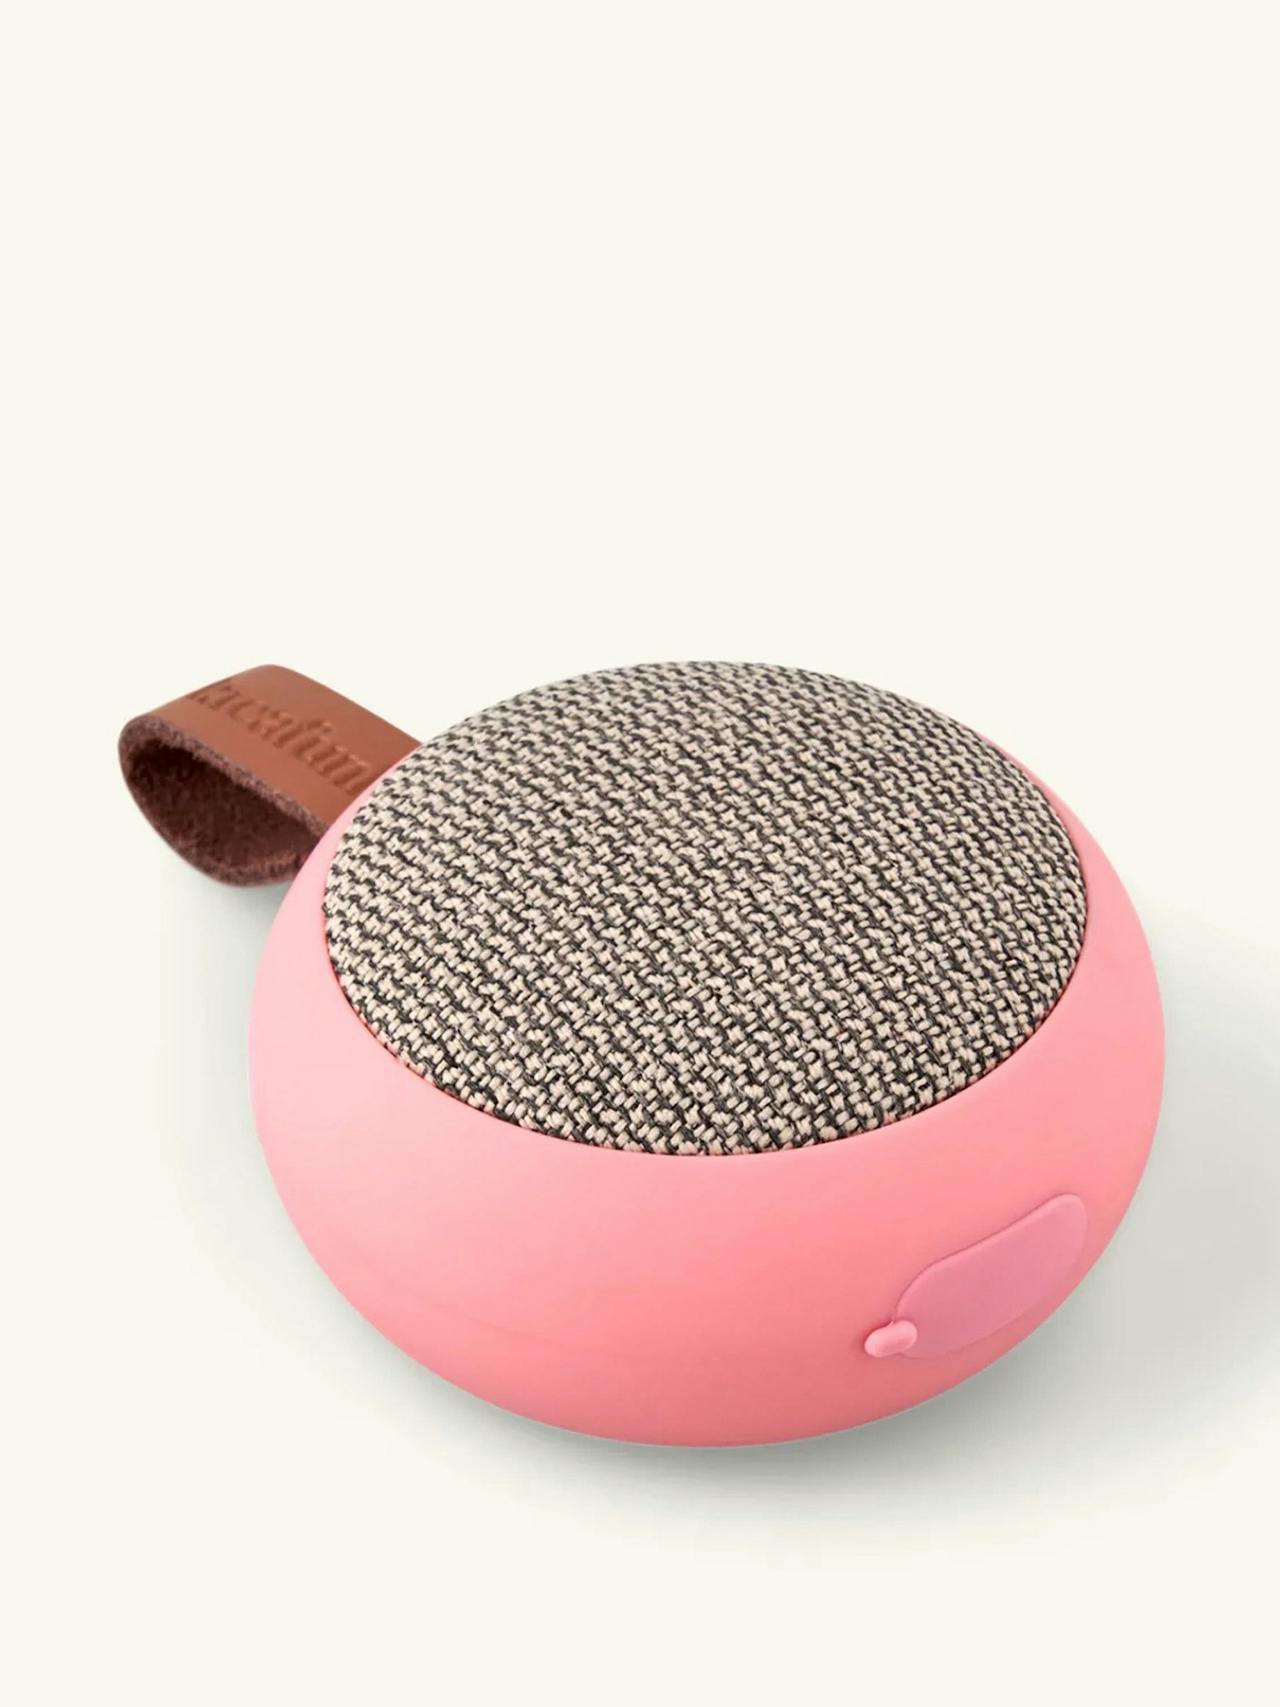 Ago II fabric Bluetooth speaker